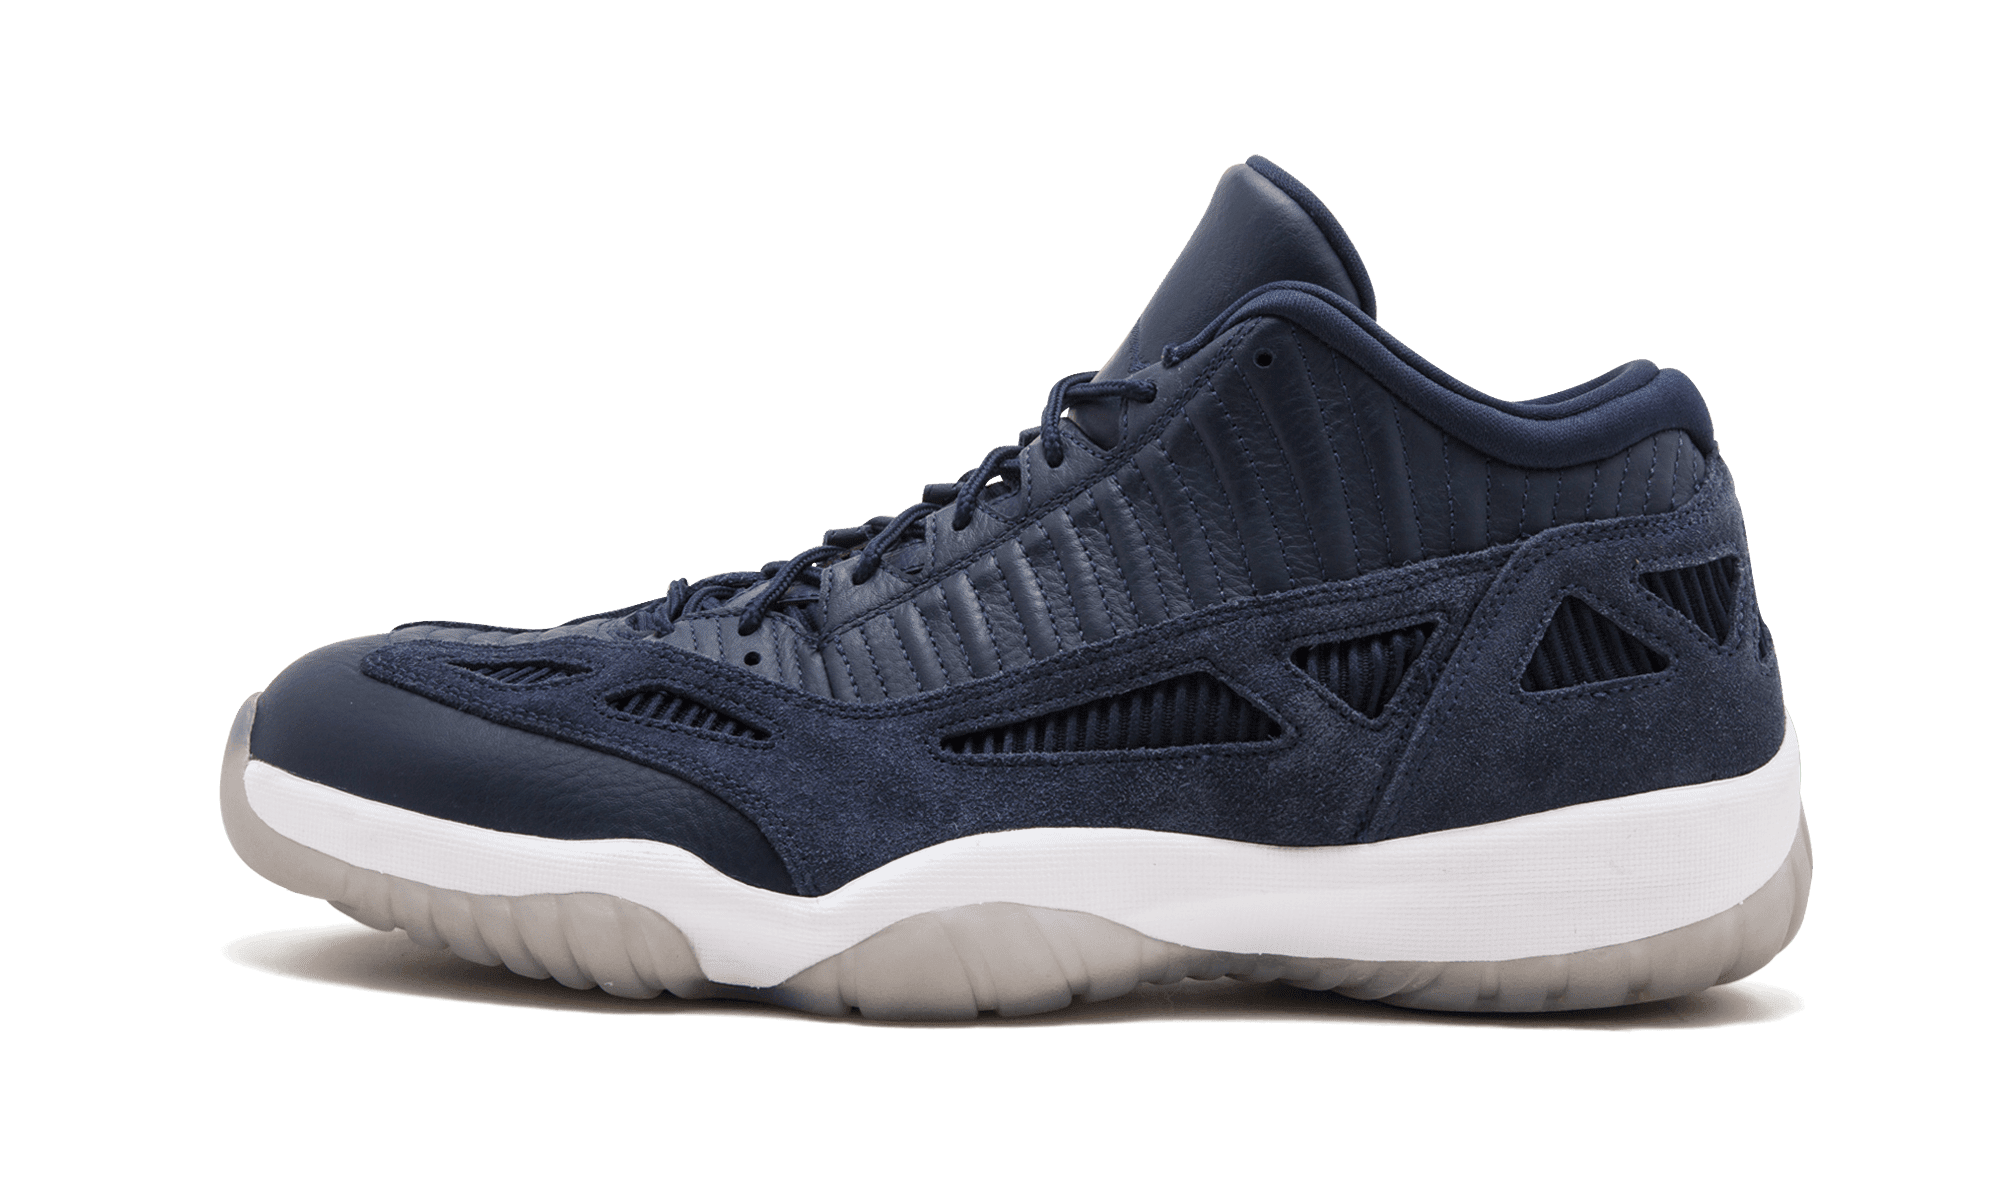 Jordan - Nike Air Jordan 11 Retro Low IE Obsidian/Wht Men's Basketball ...